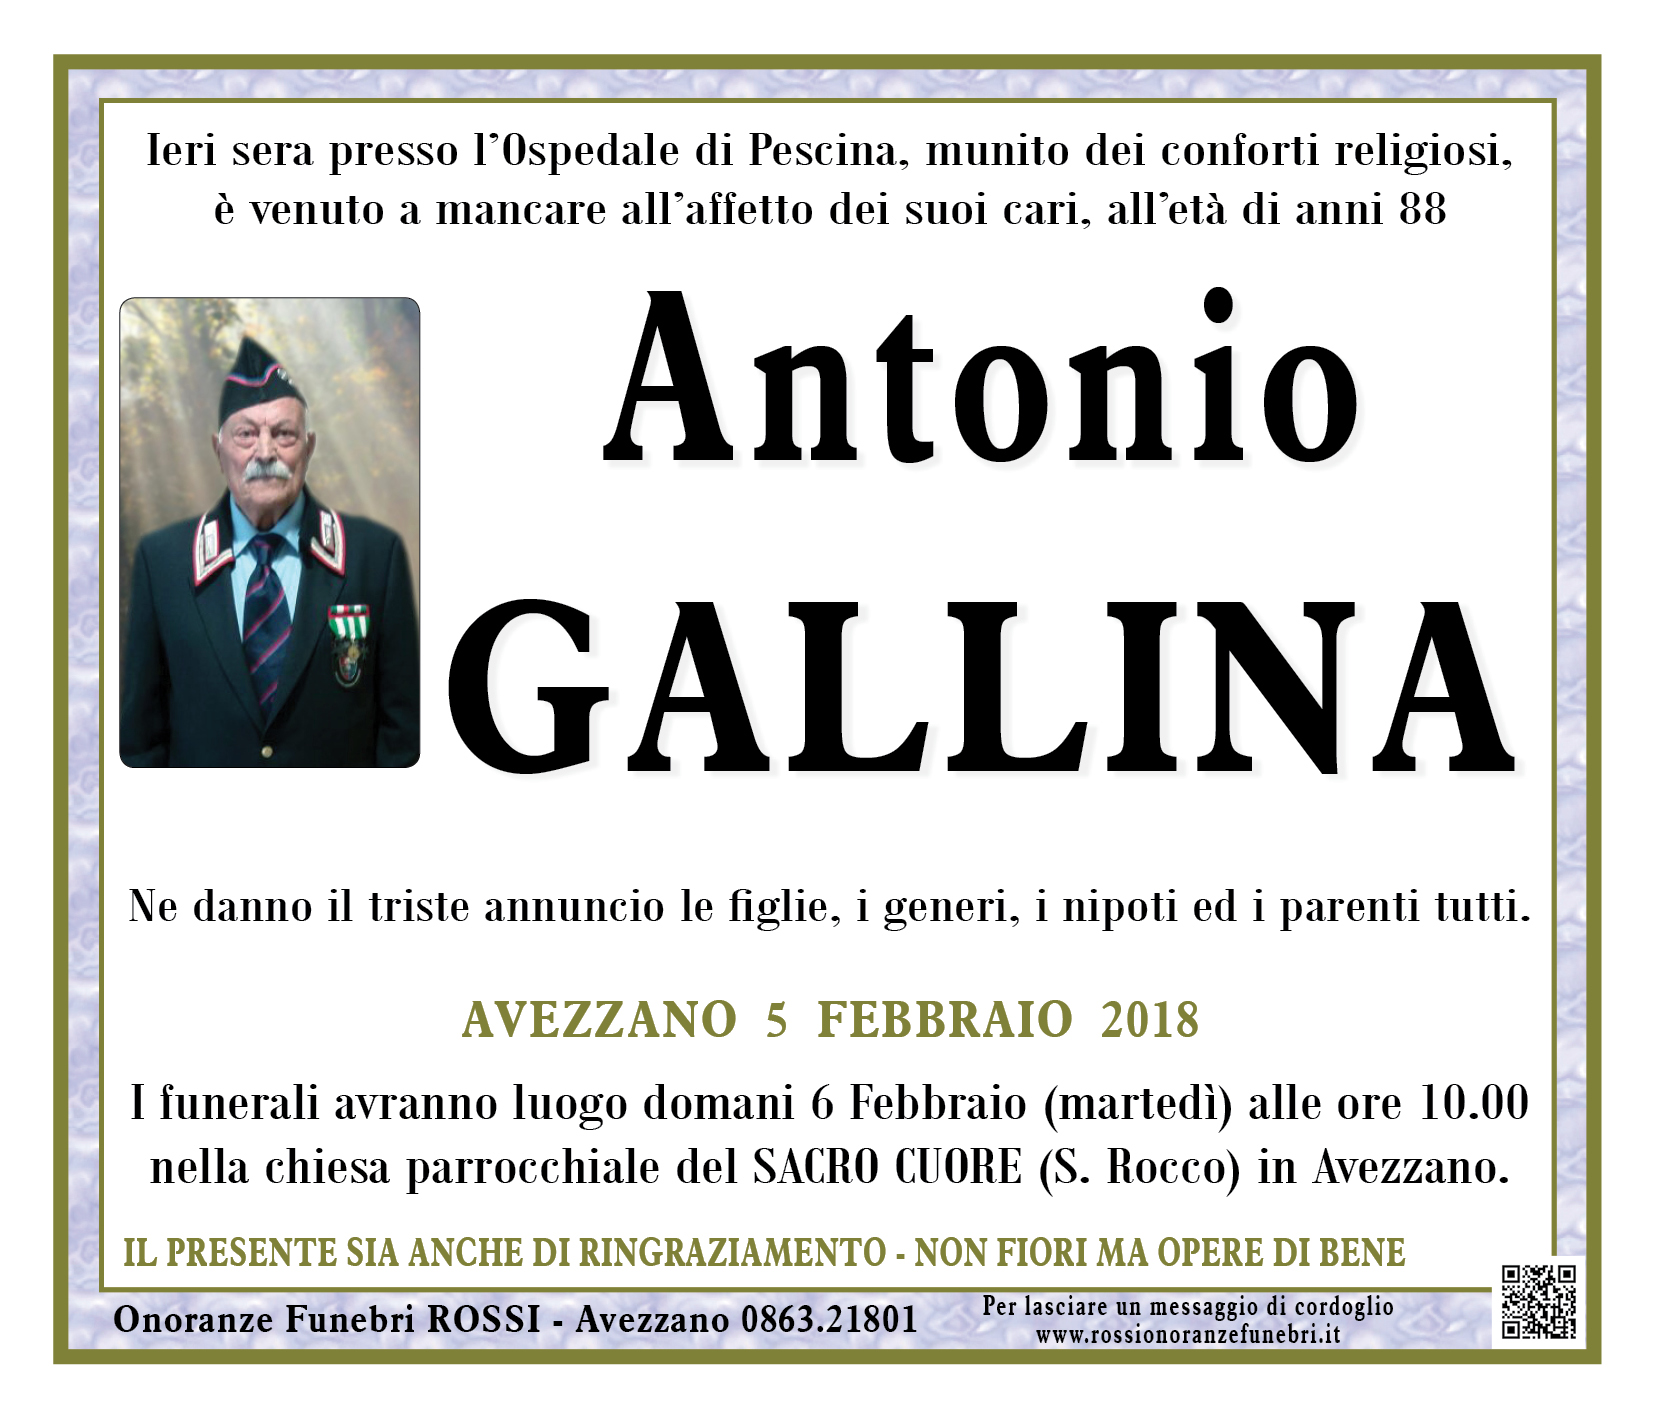 Antonio Gallina